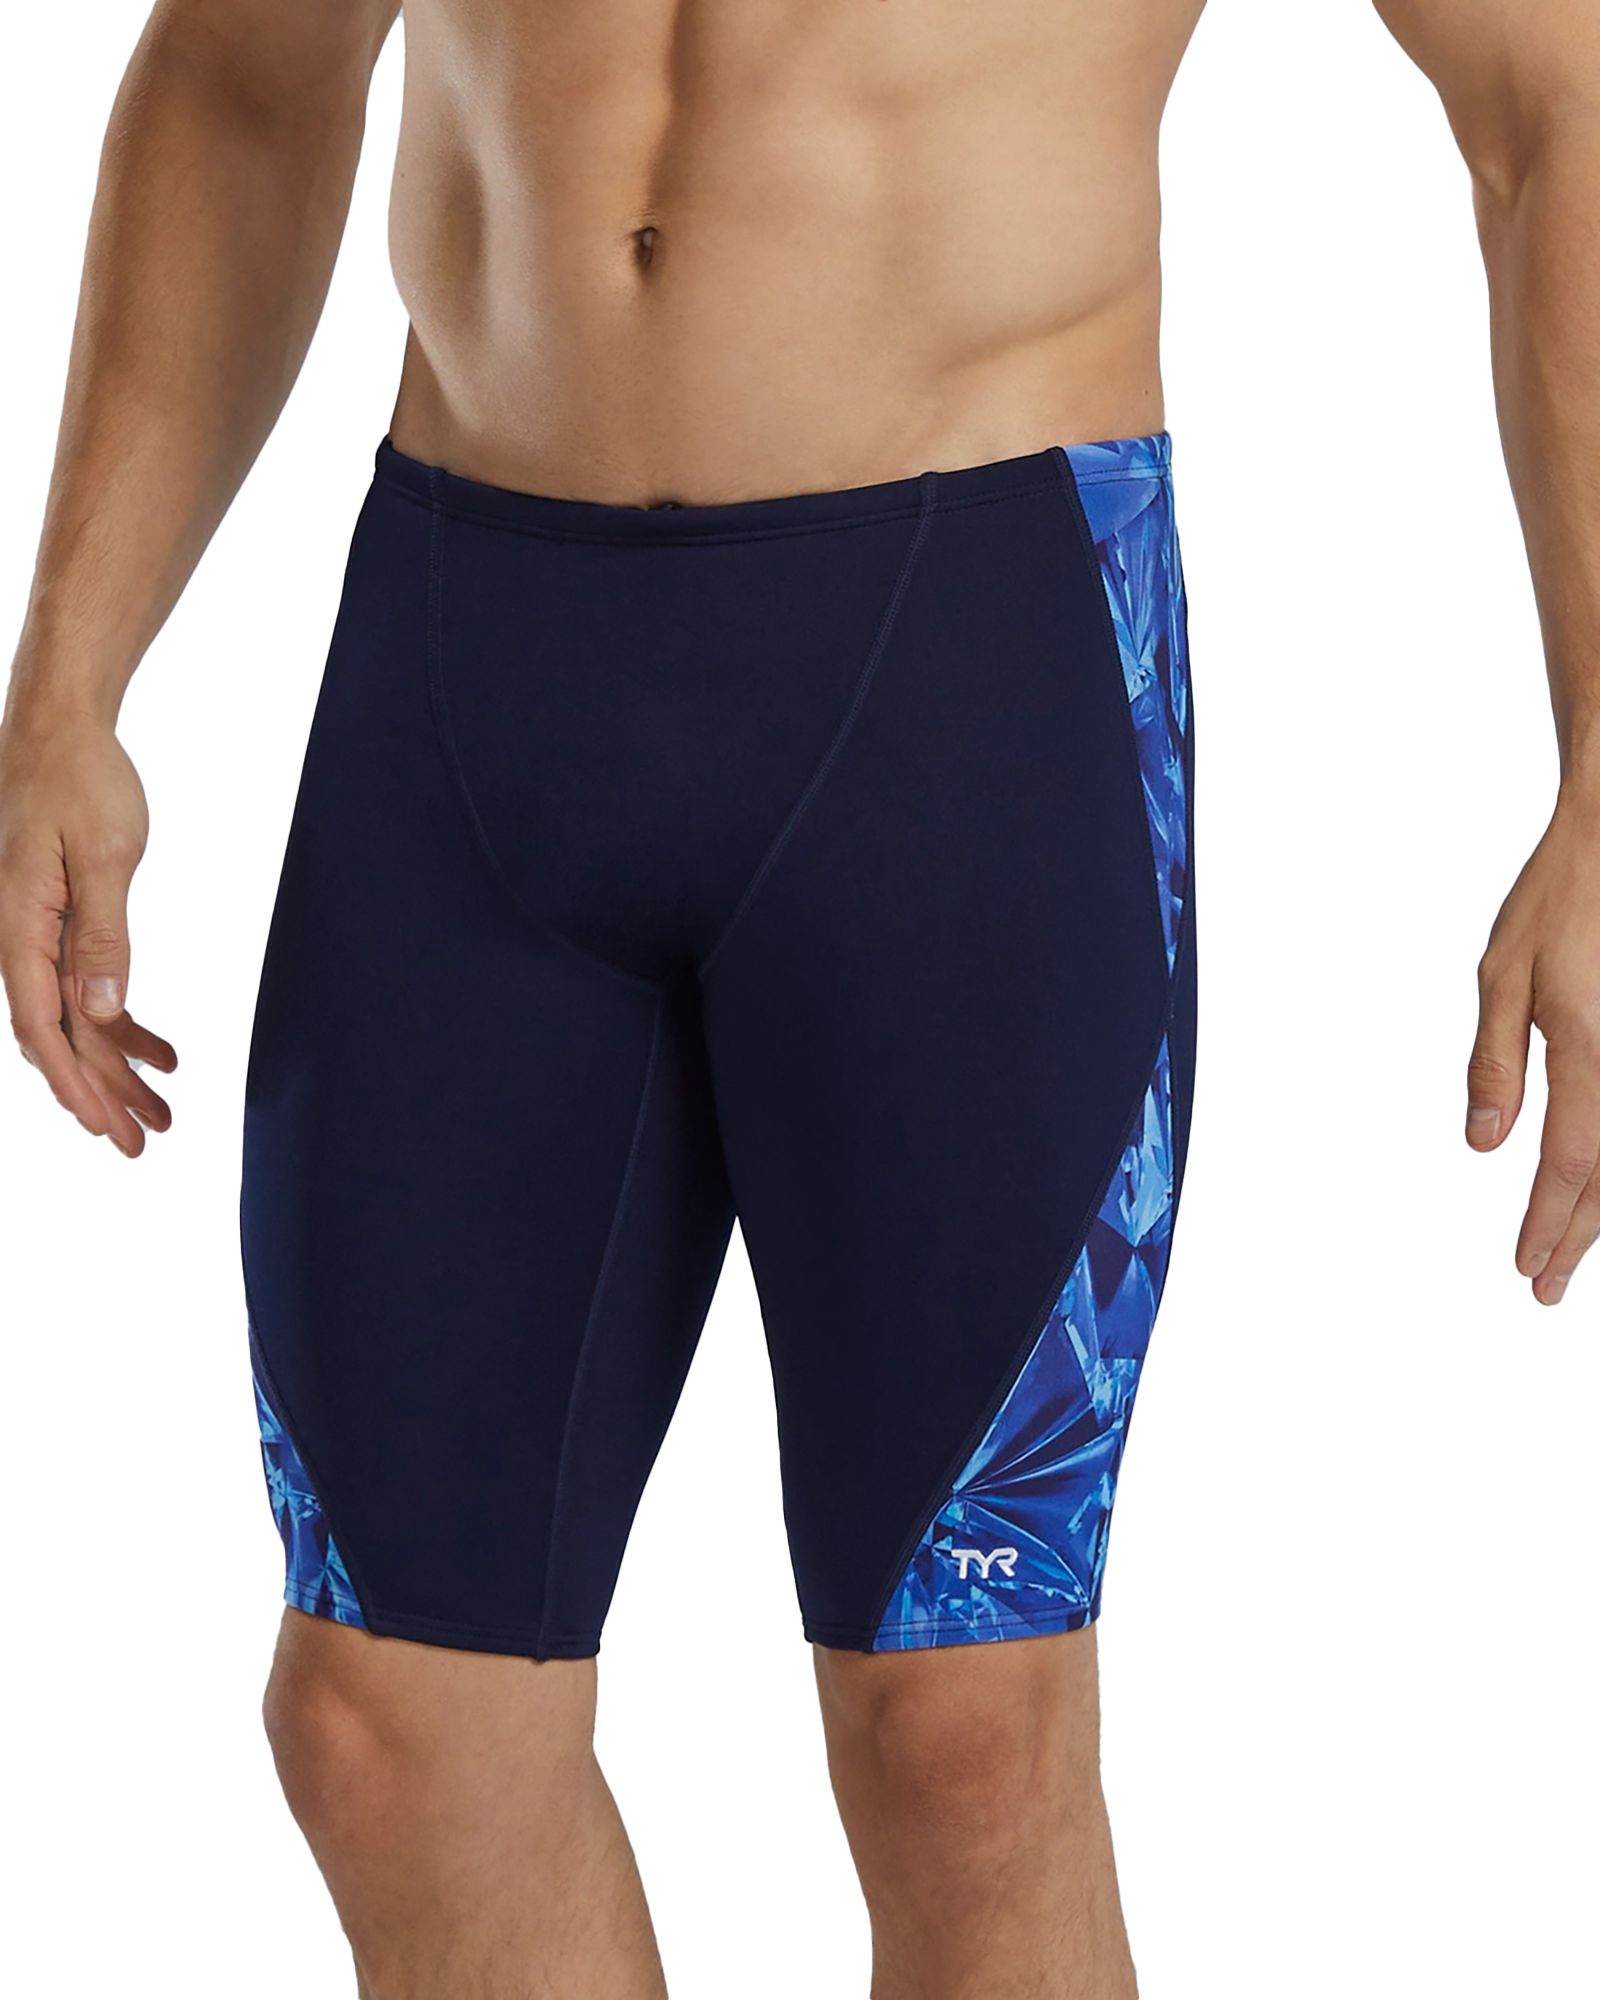 Photos - Swimwear TYR Men's Durafast Eliste Crystalized Jammer Swimsuit, Size 38, Blue 23TYR 